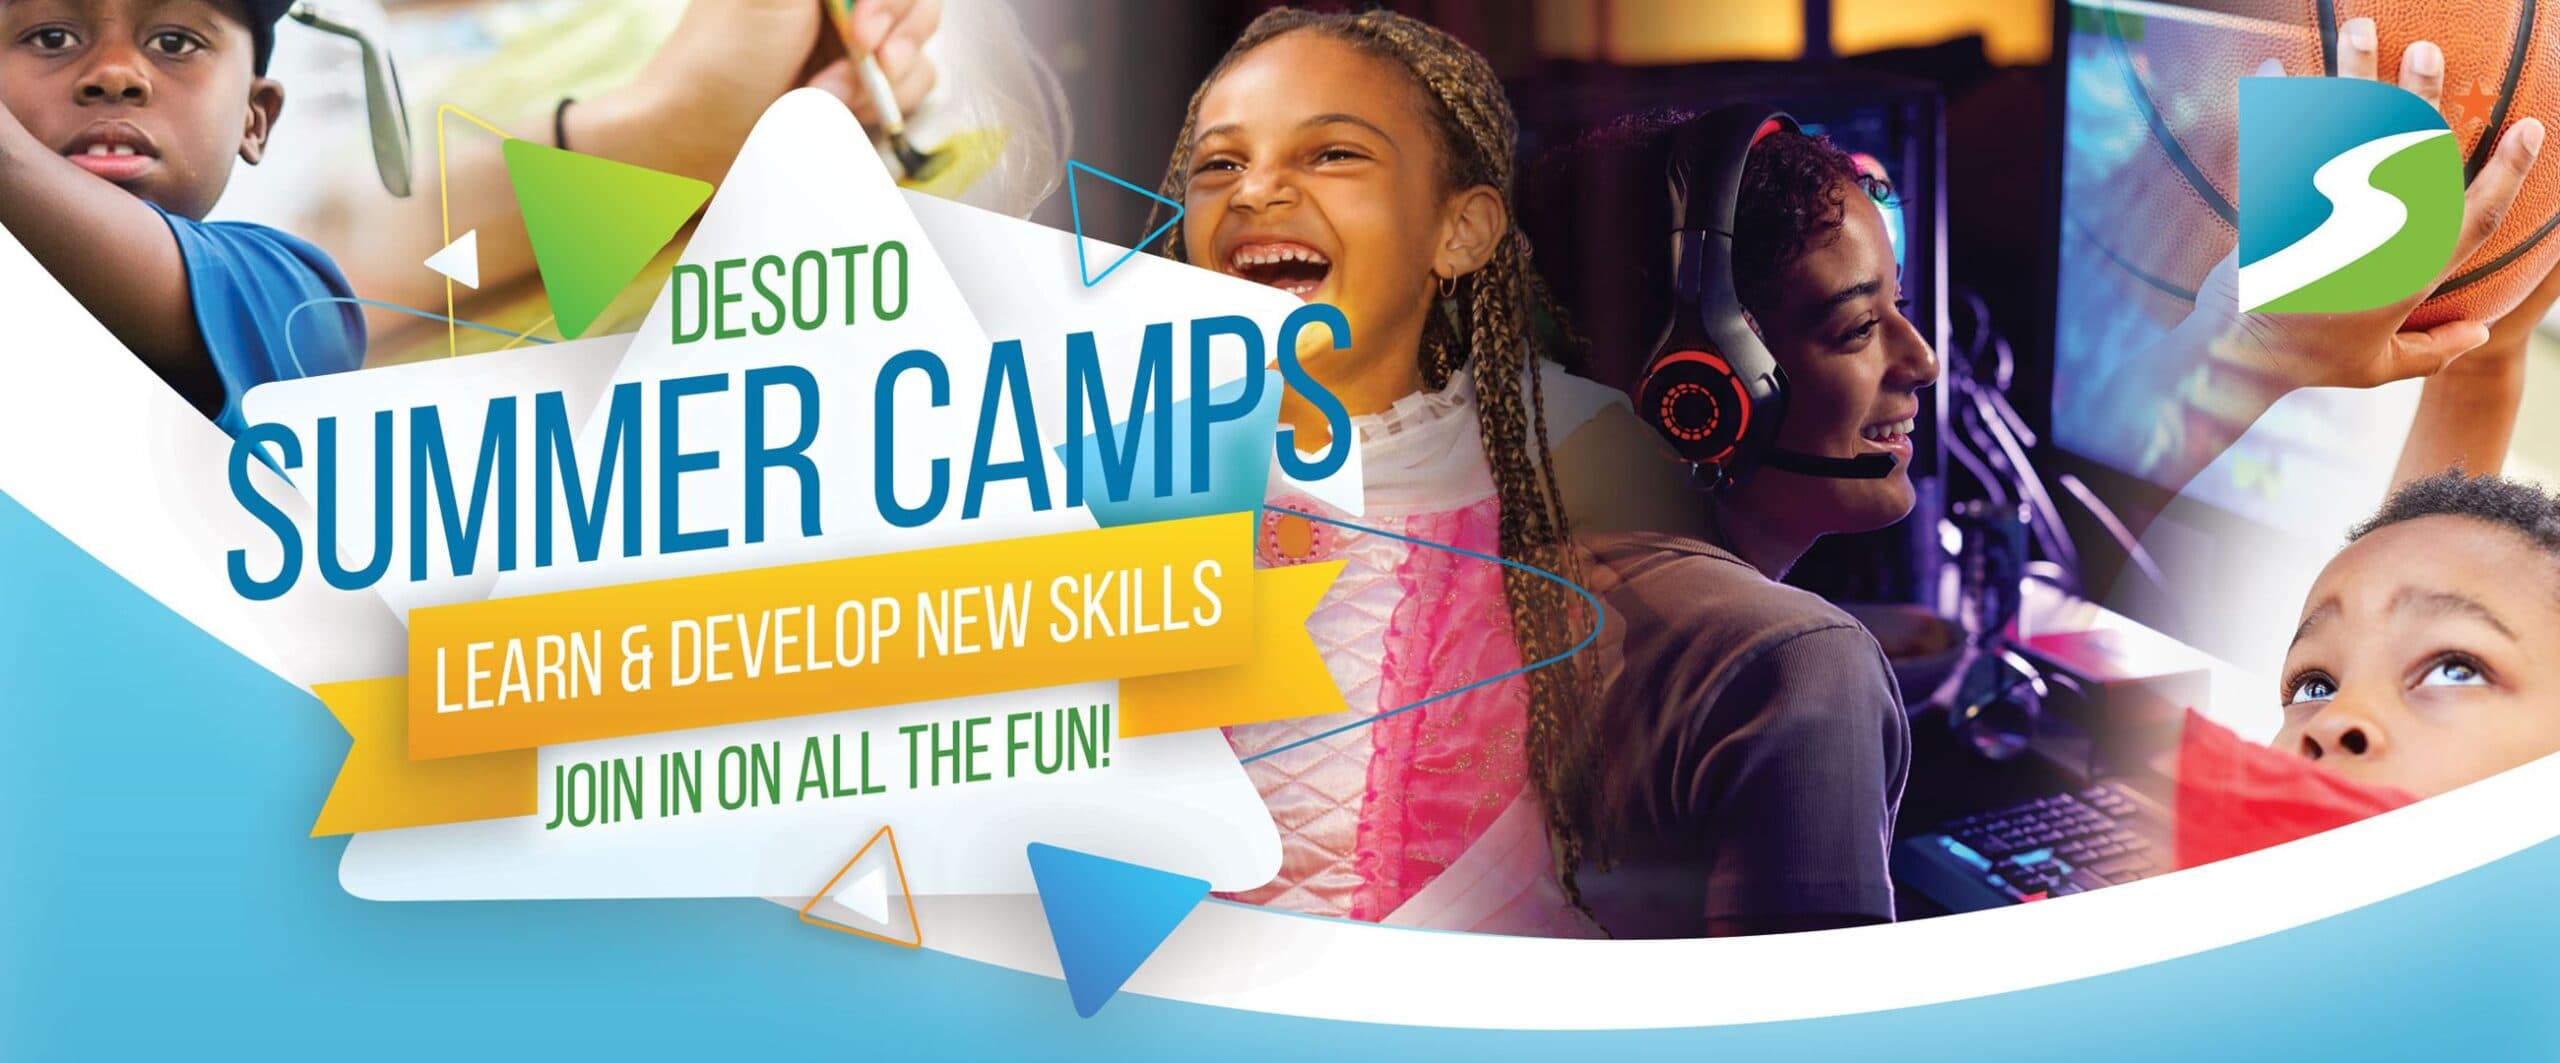 DeSoto summer camp flyer